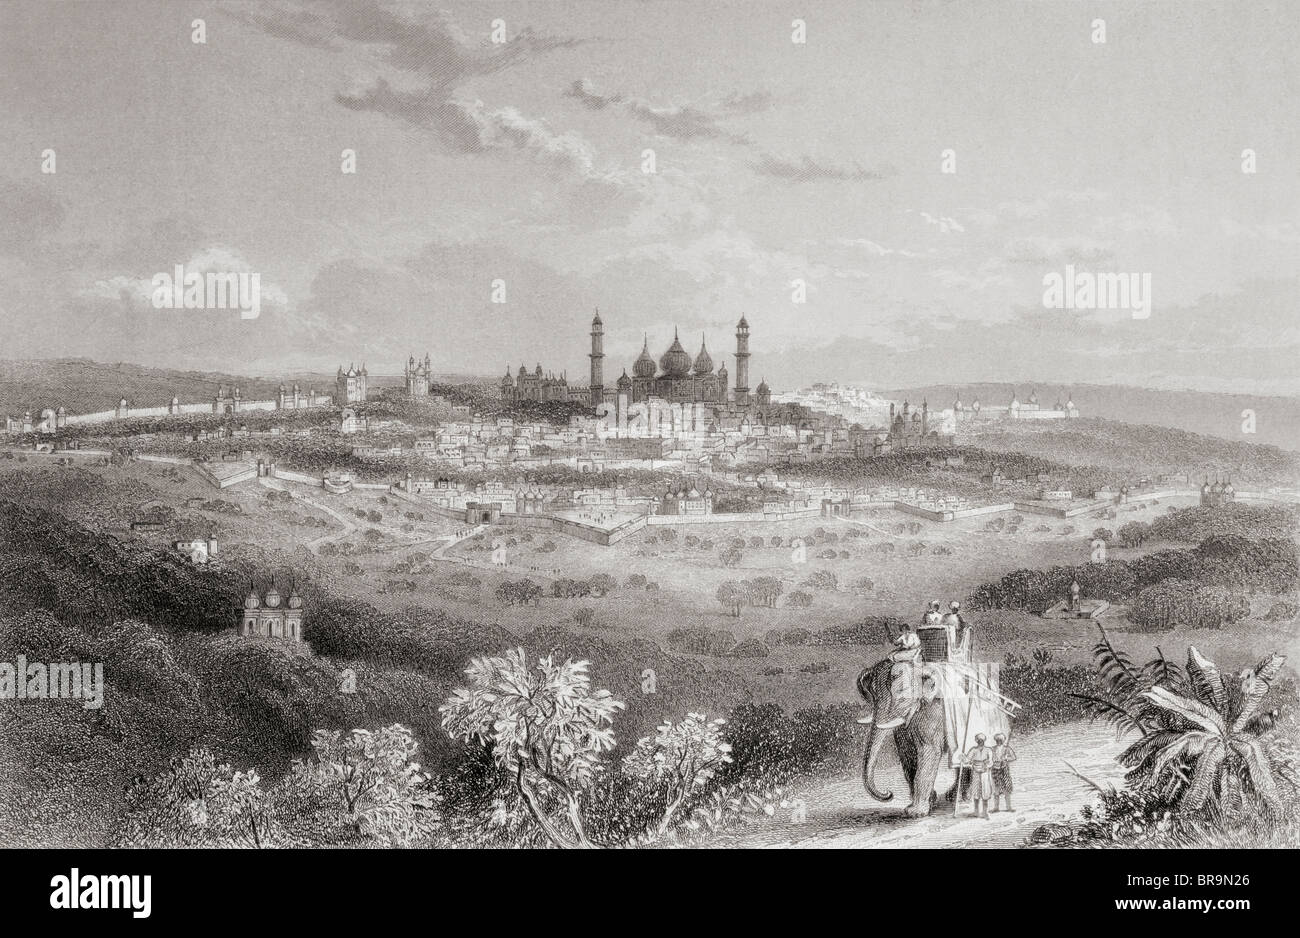 Delhi, India, from a 19th century print. Stock Photo